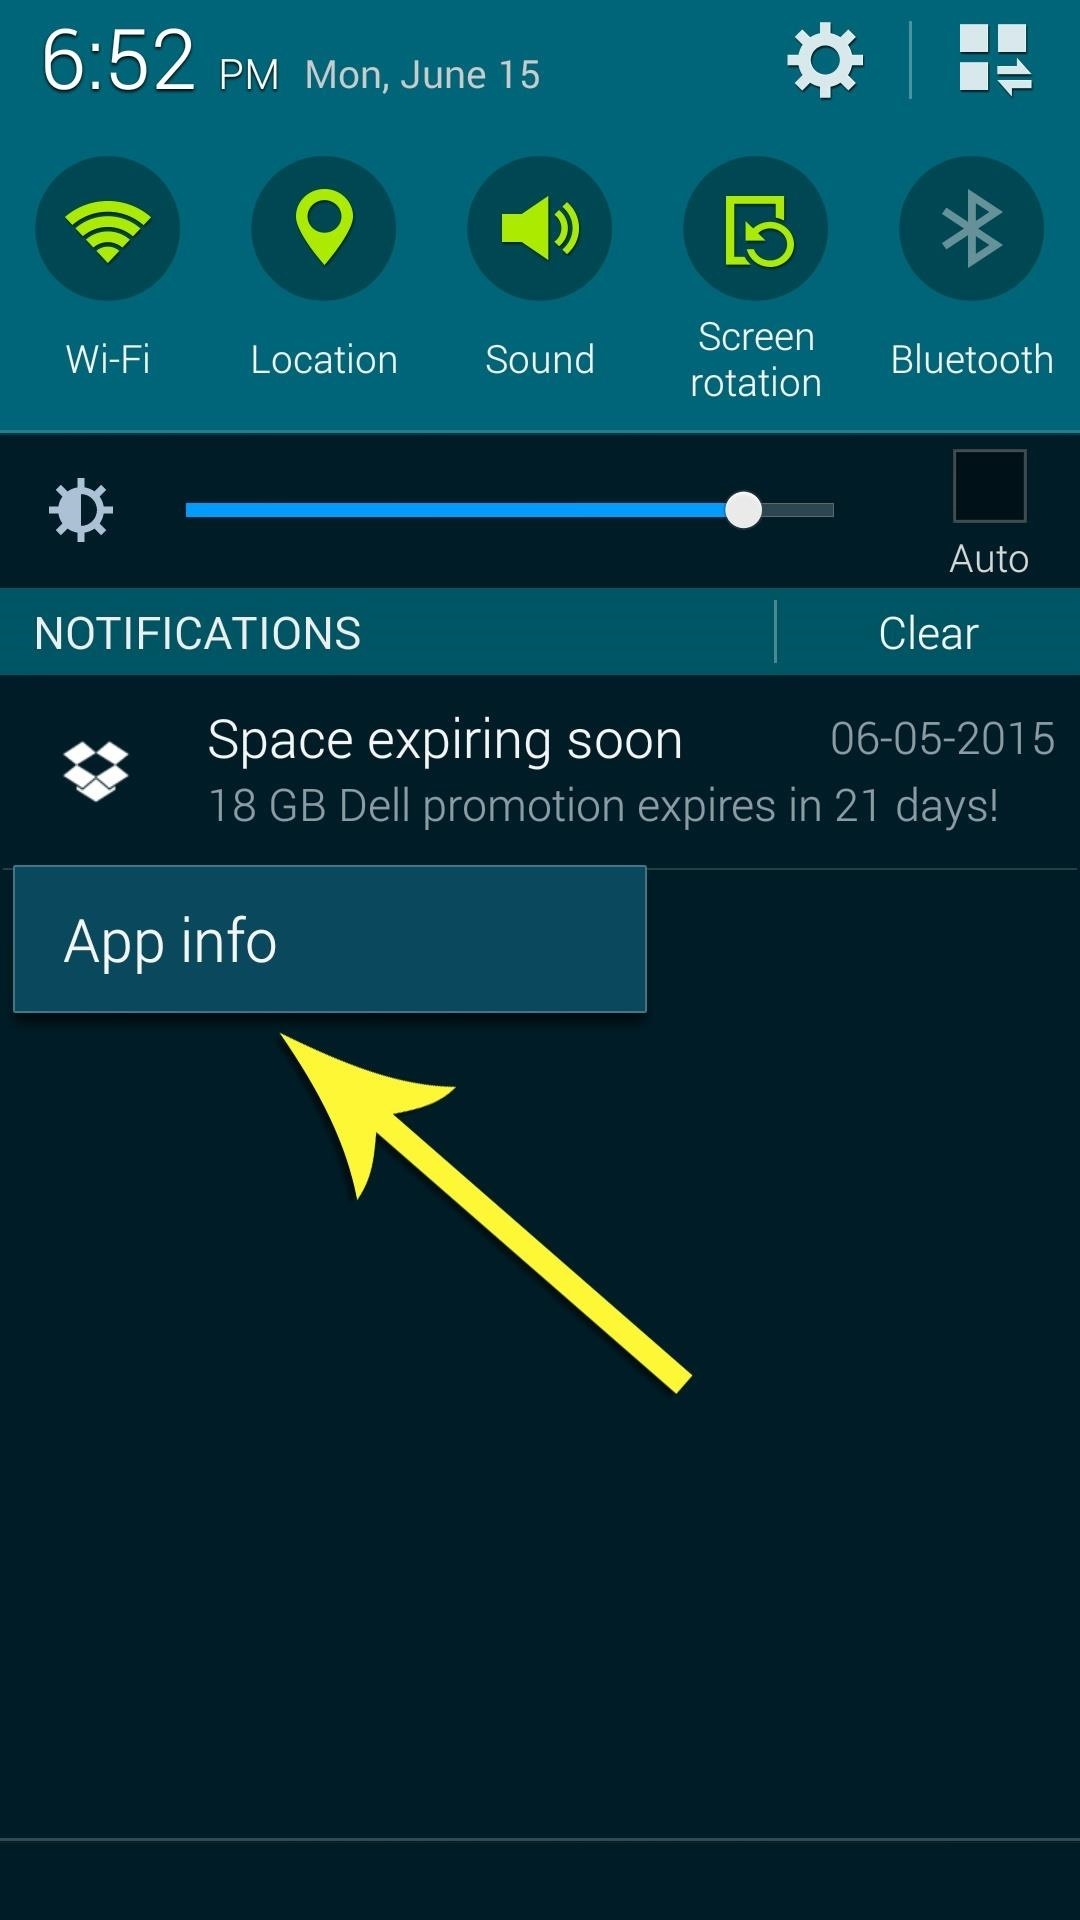 Badoo message notification on iphone